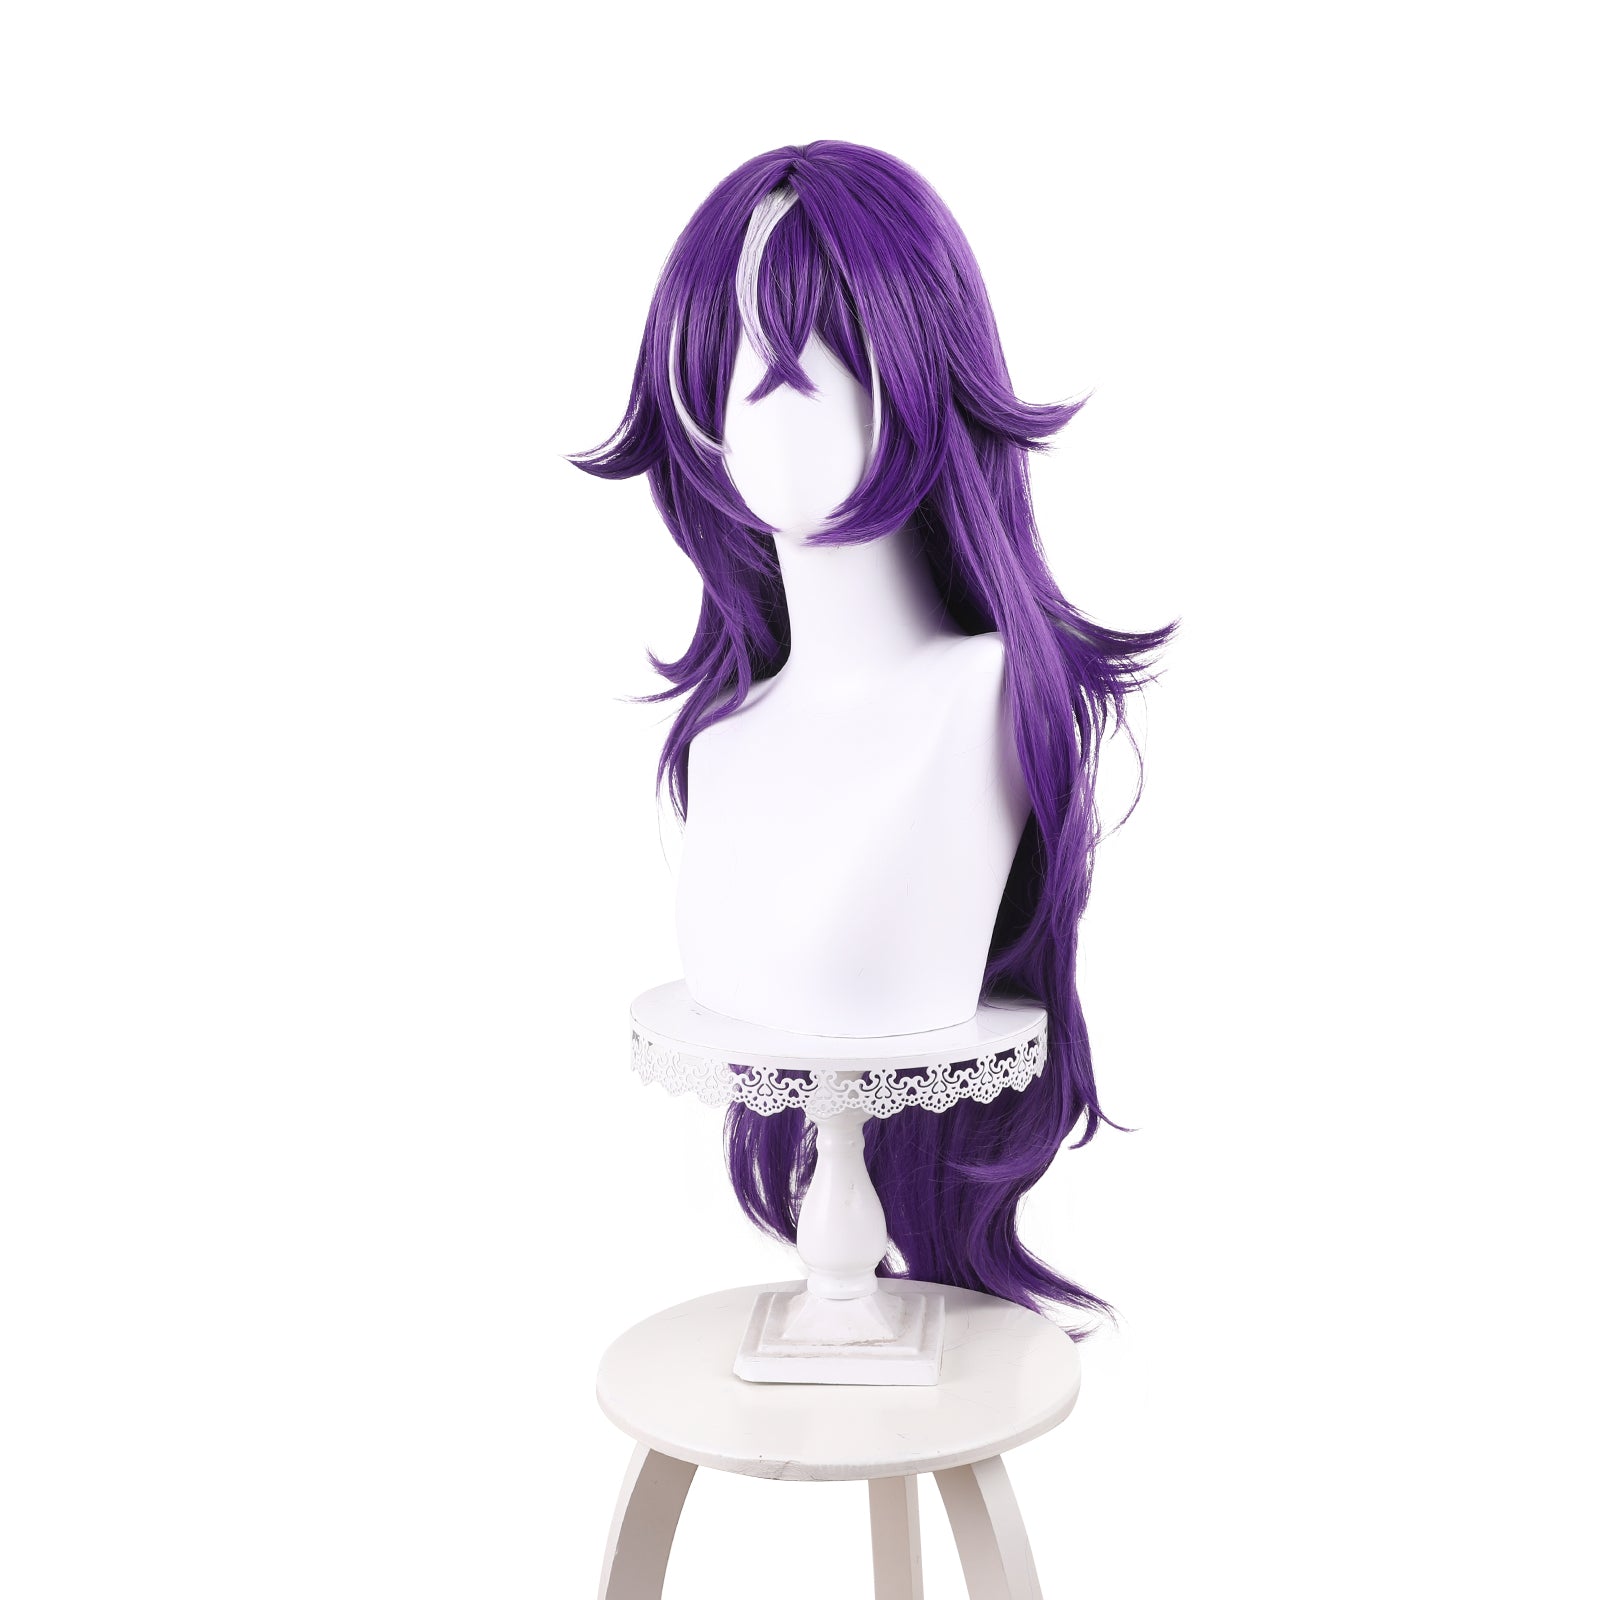 Rulercosplay Anime Genshin Impact Chevreuse Purple Long Cosplay Wig